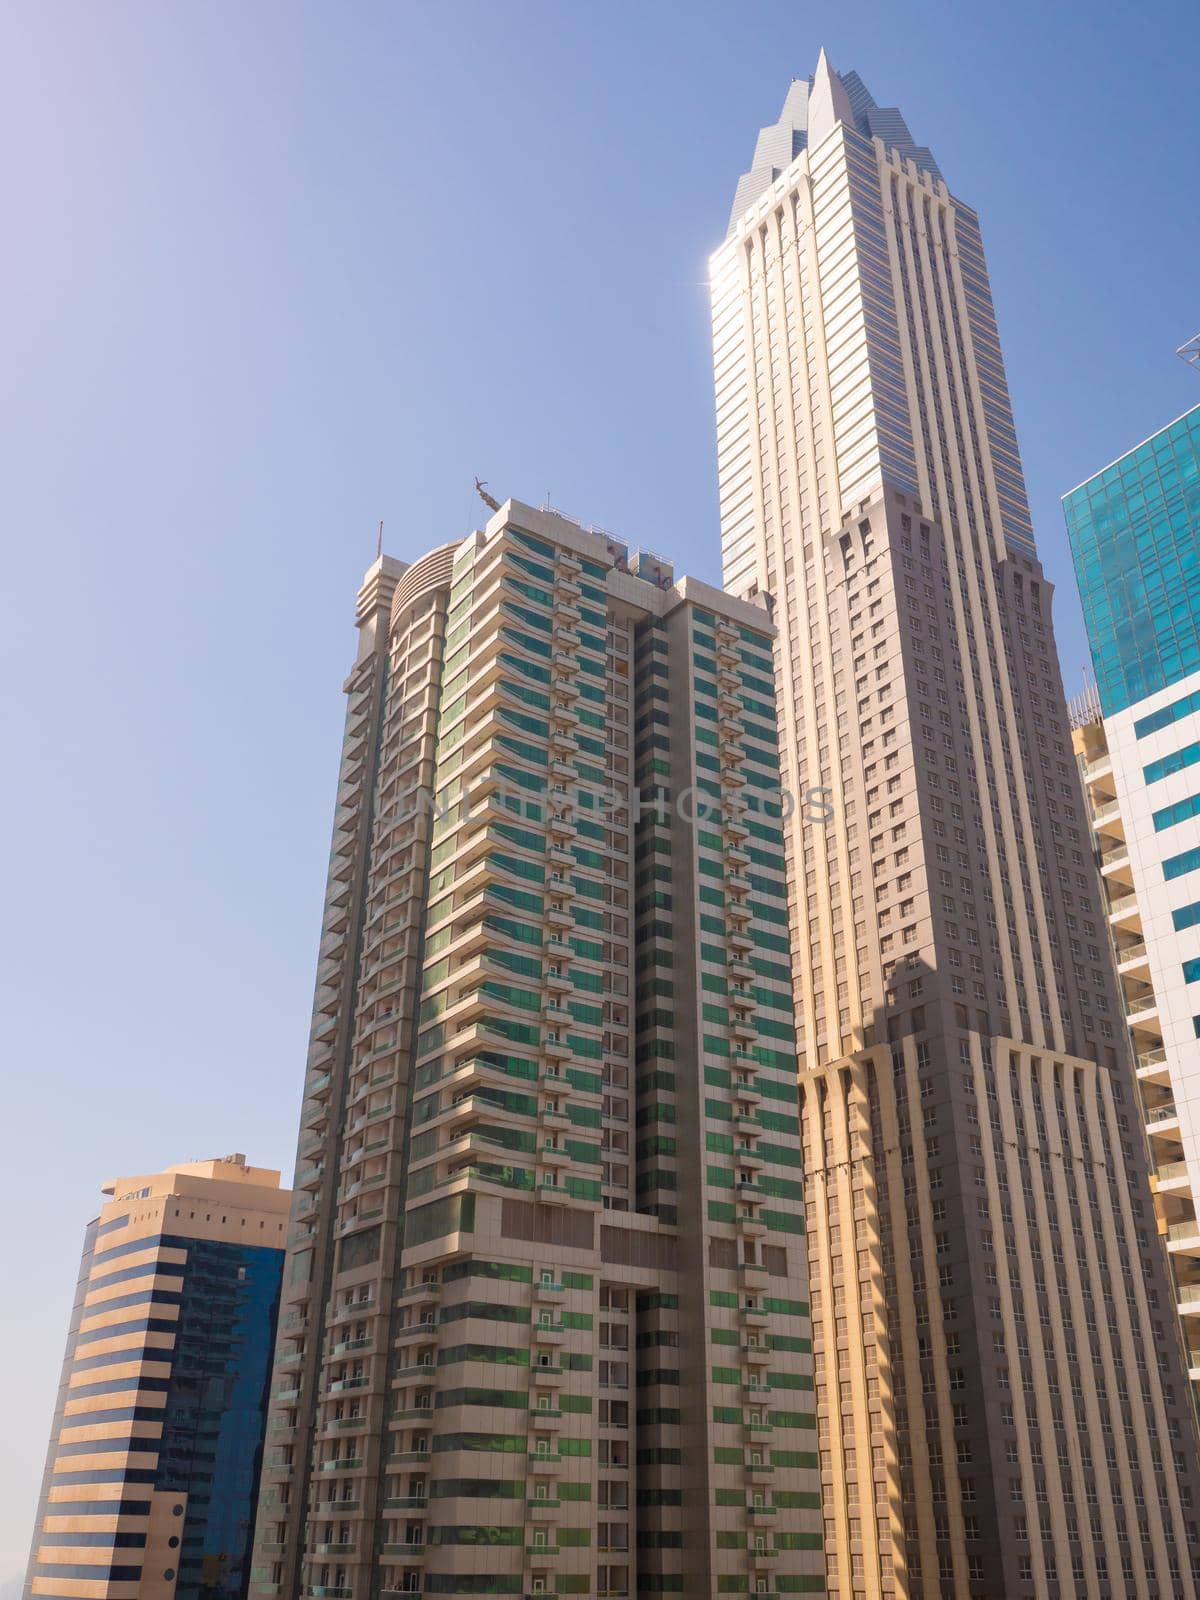 Residential skyscraper in Dubai on a sunny day. UAE. by DovidPro